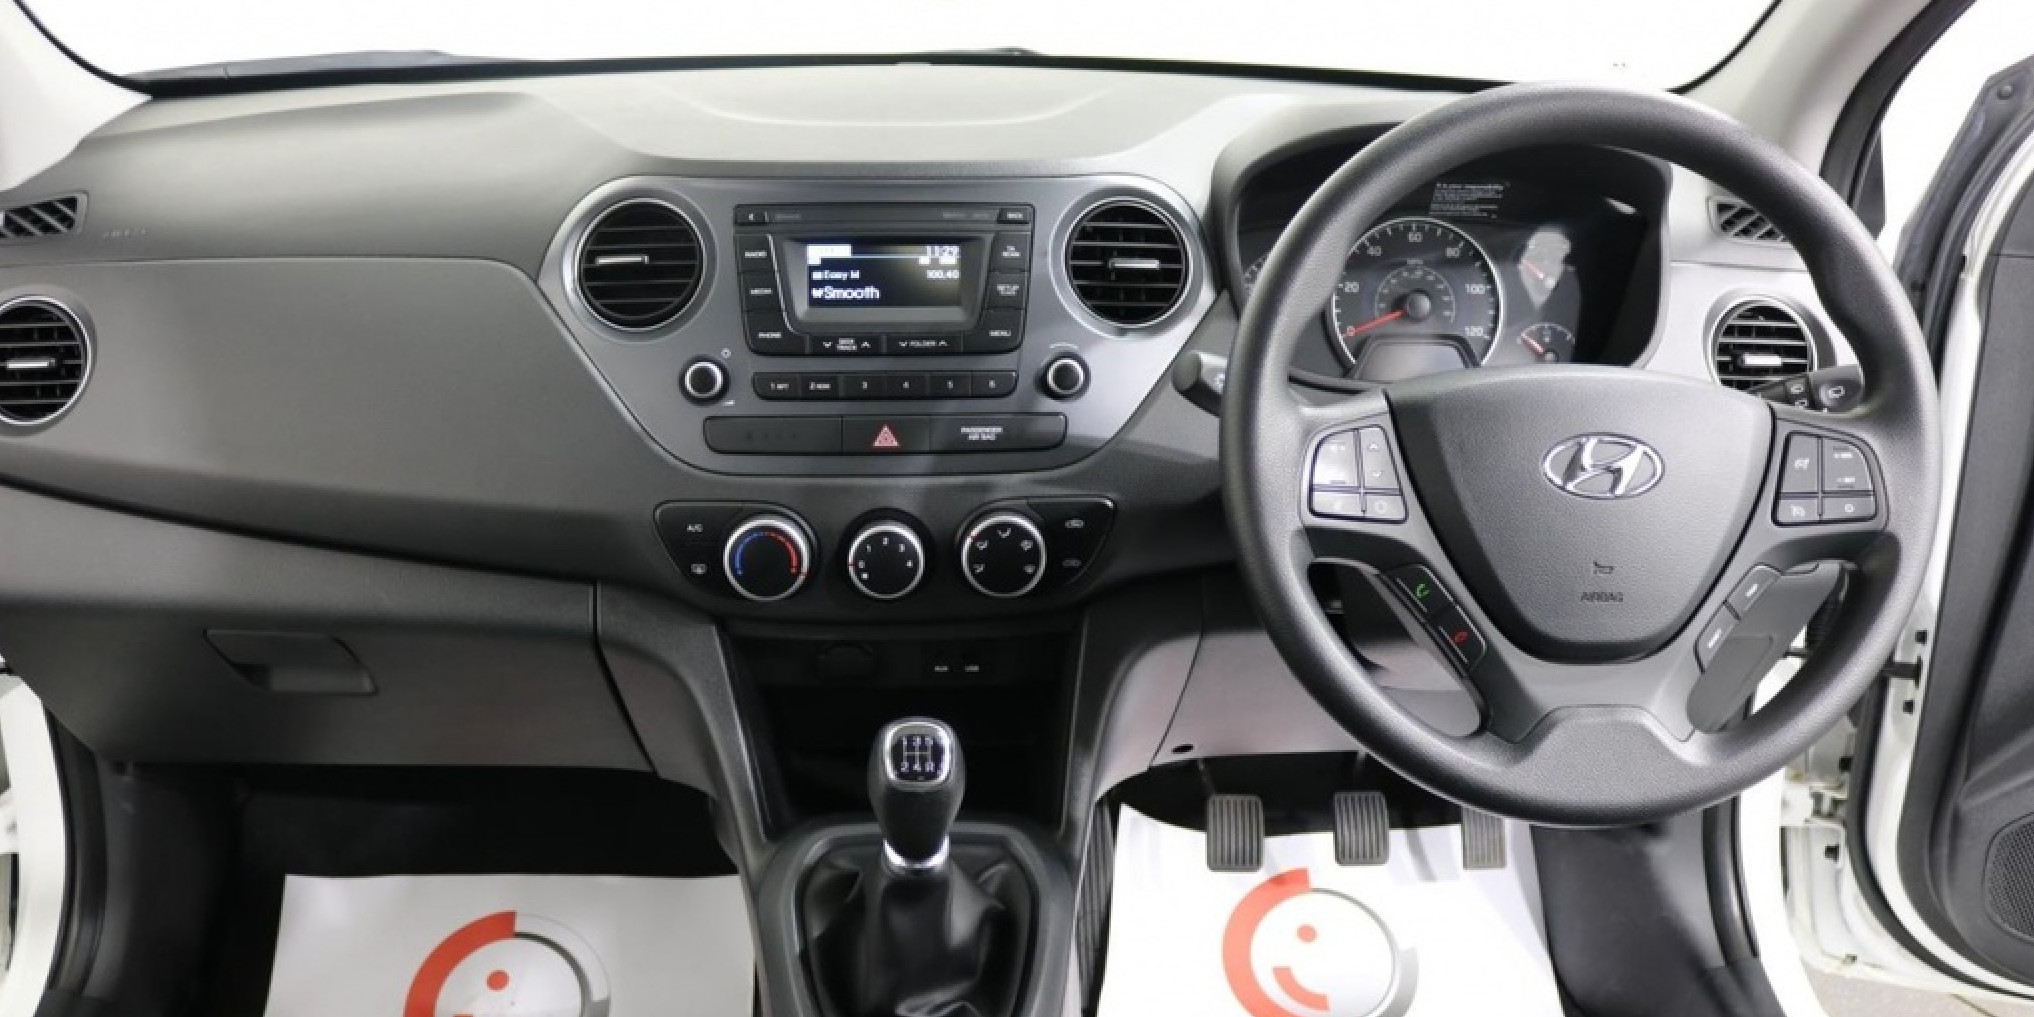 Front interior of Hyundai i10 